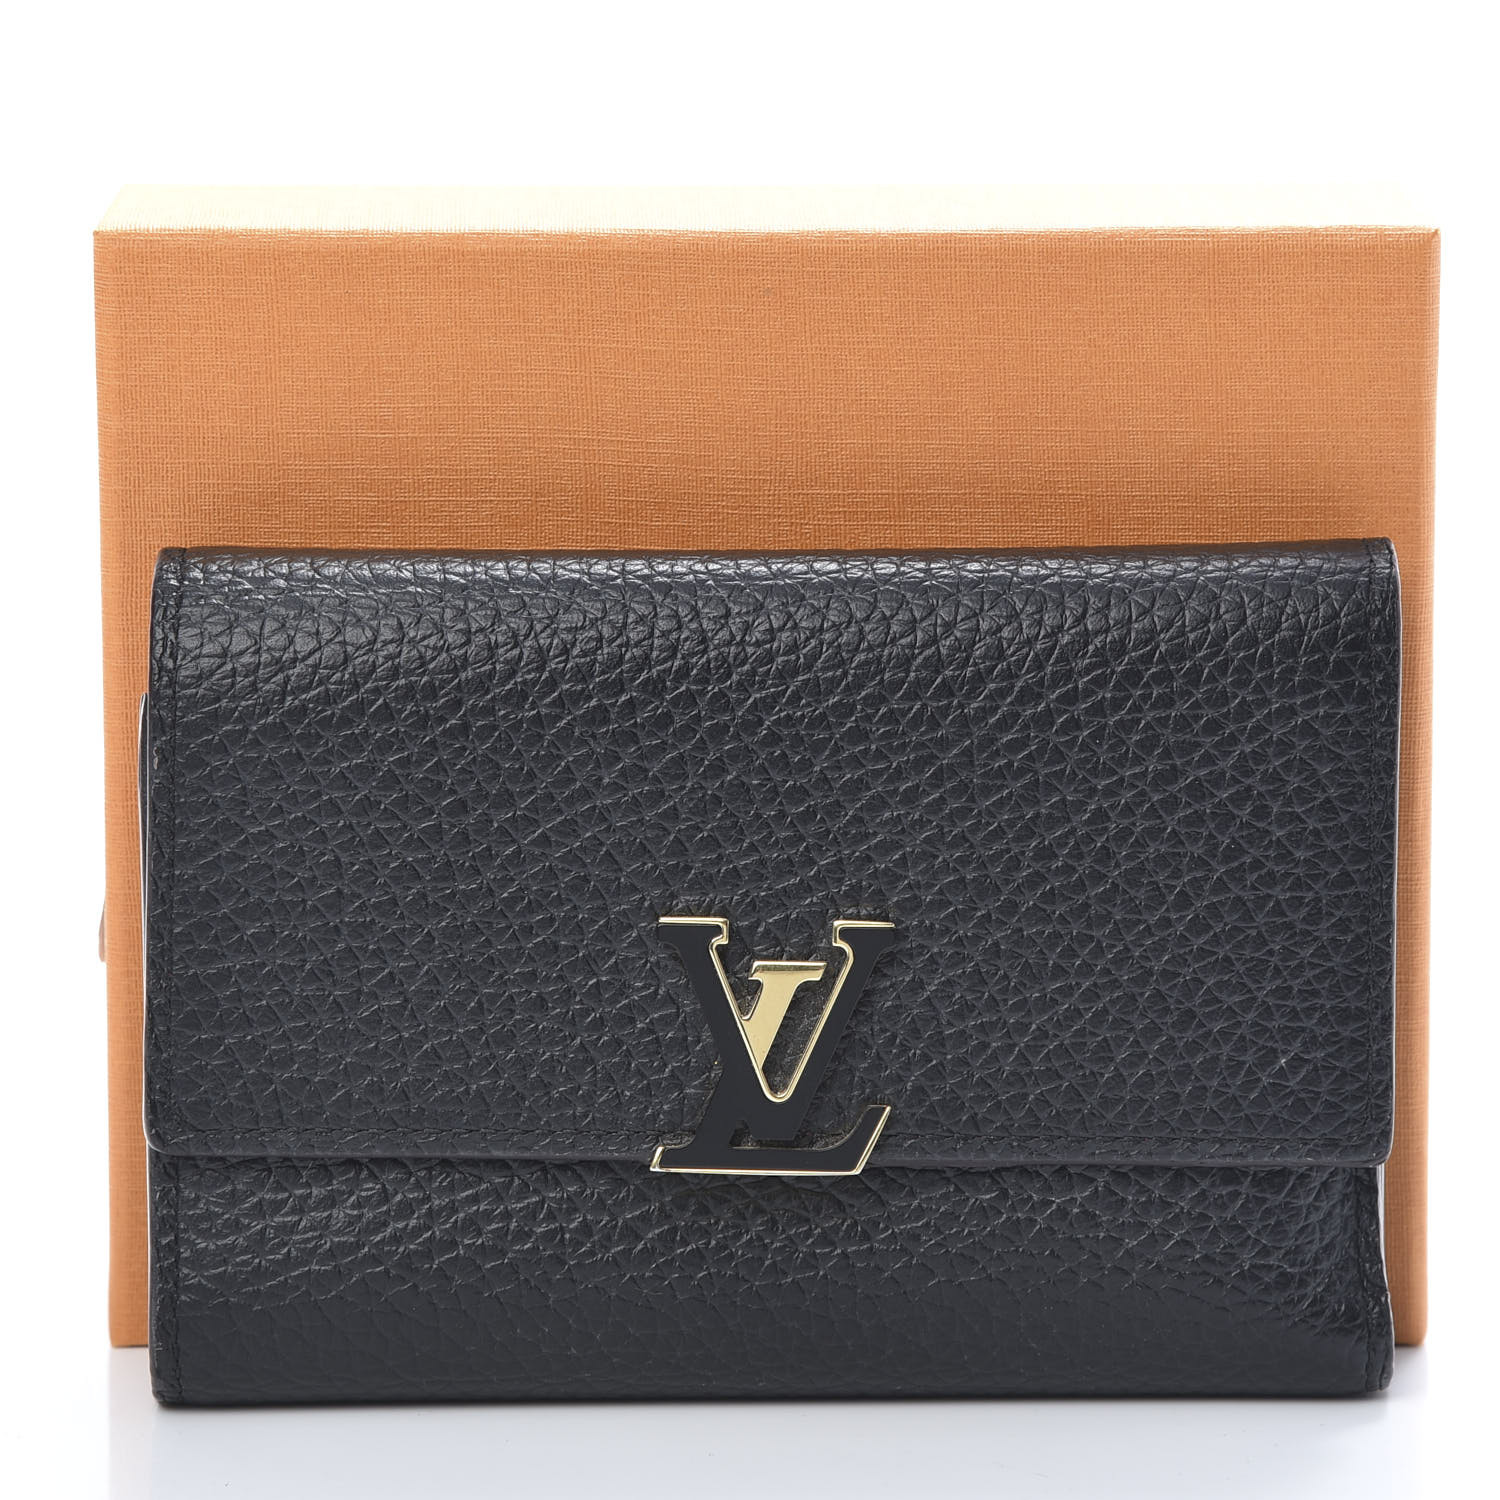 Louis Vuitton Studded Capucines Compact Wallet